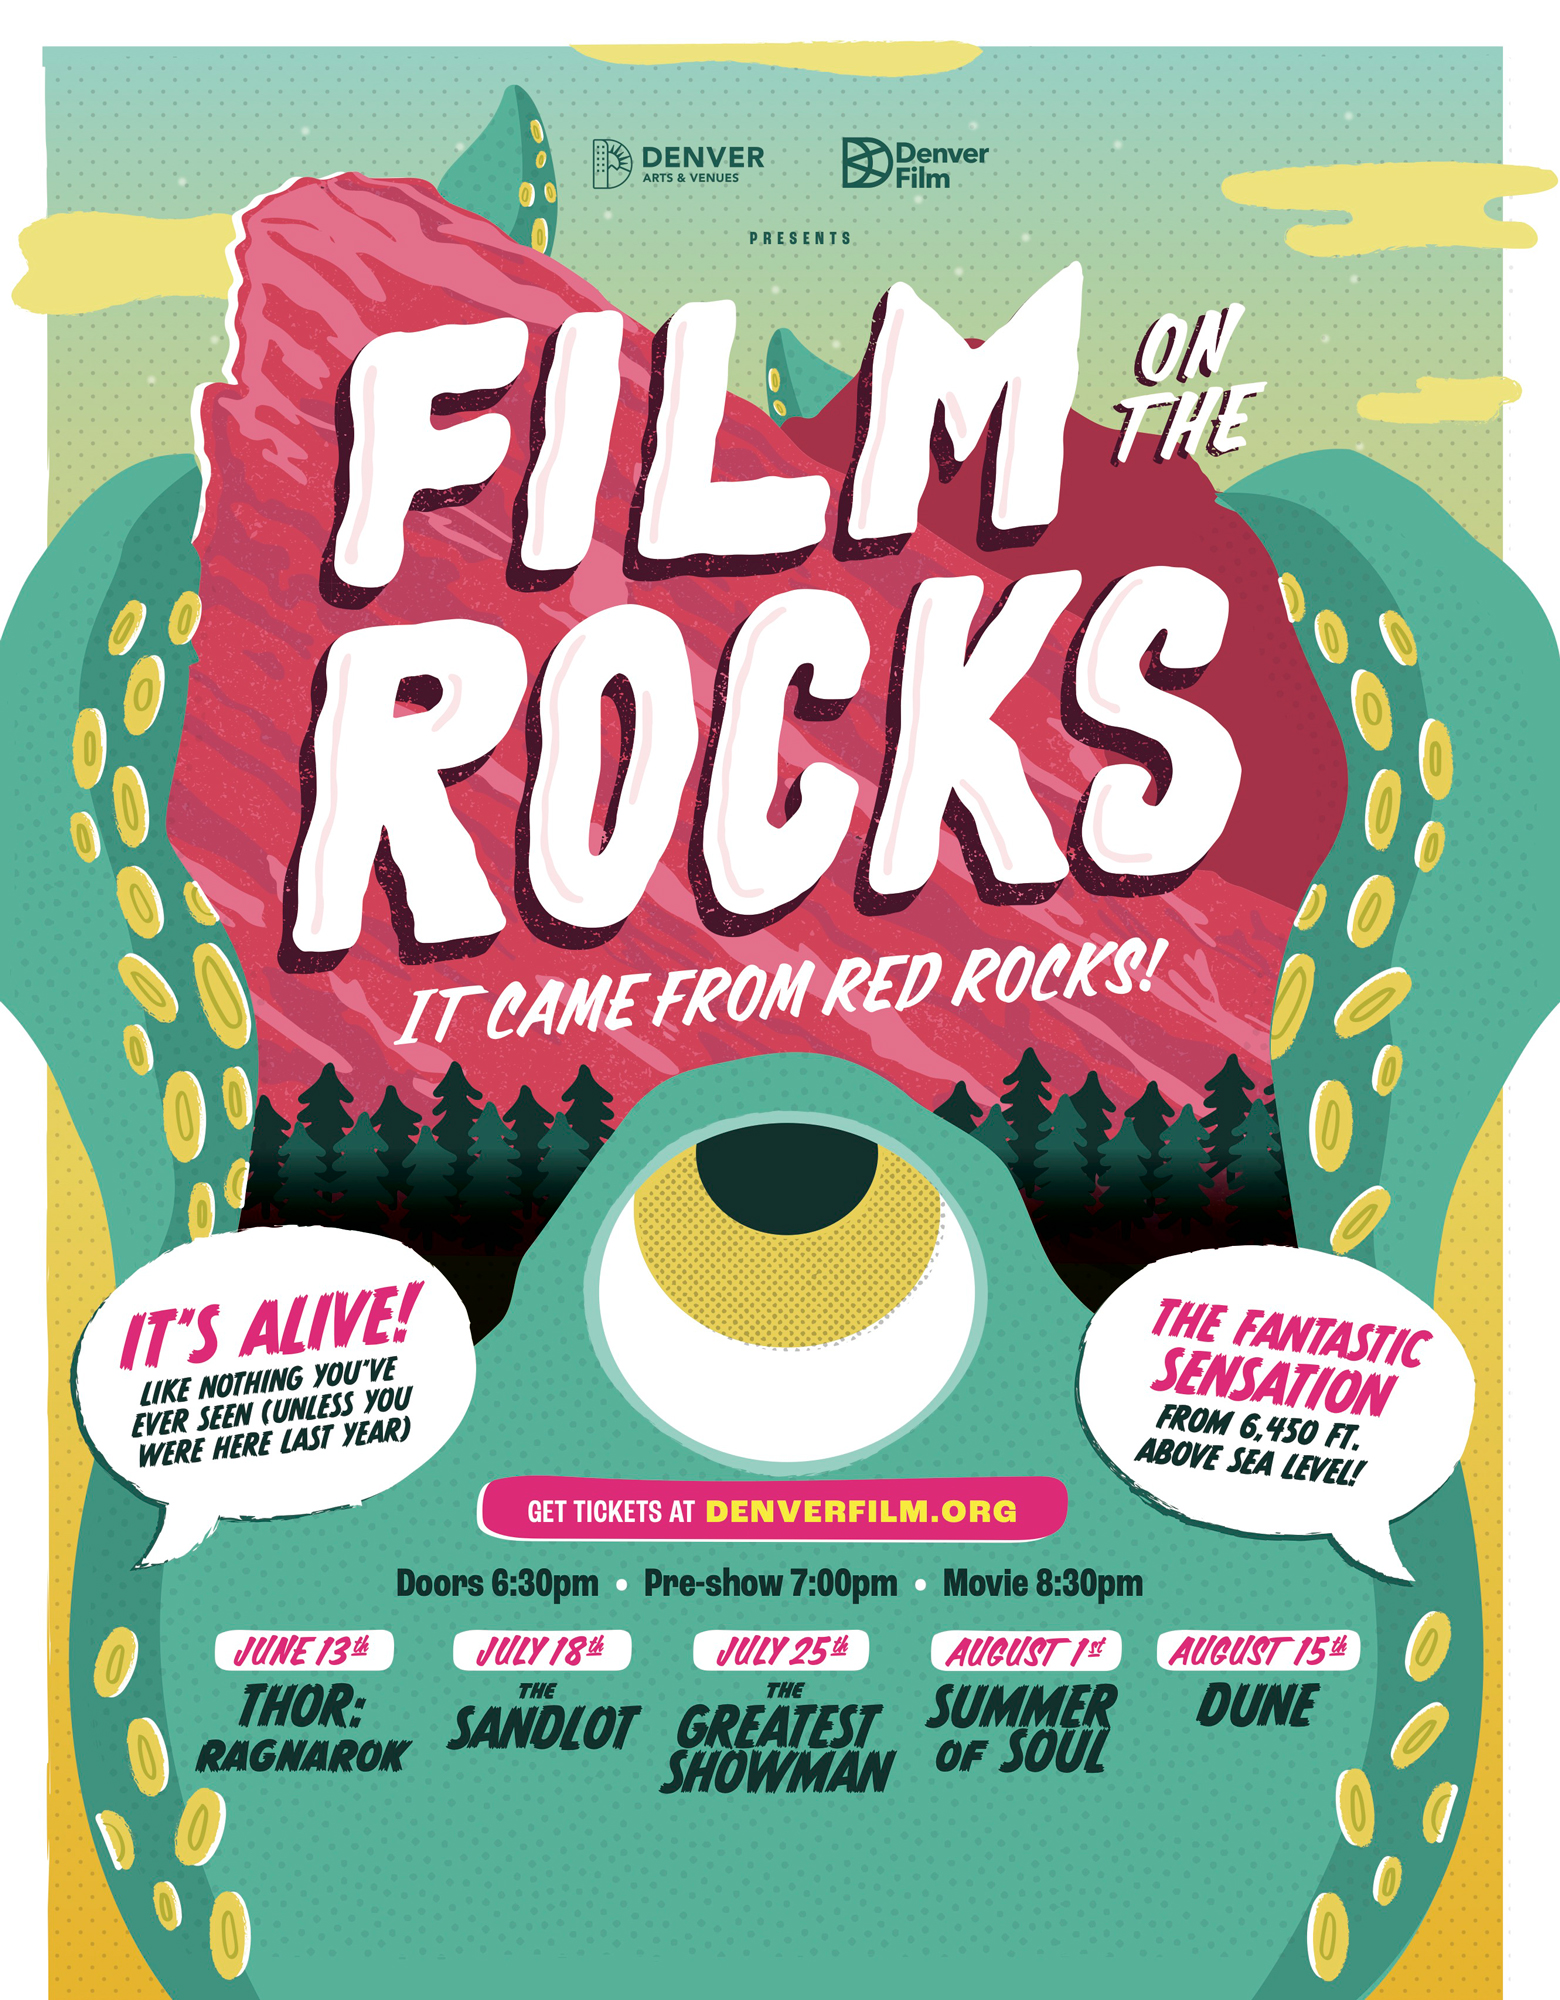 Denver Film on the Rocks